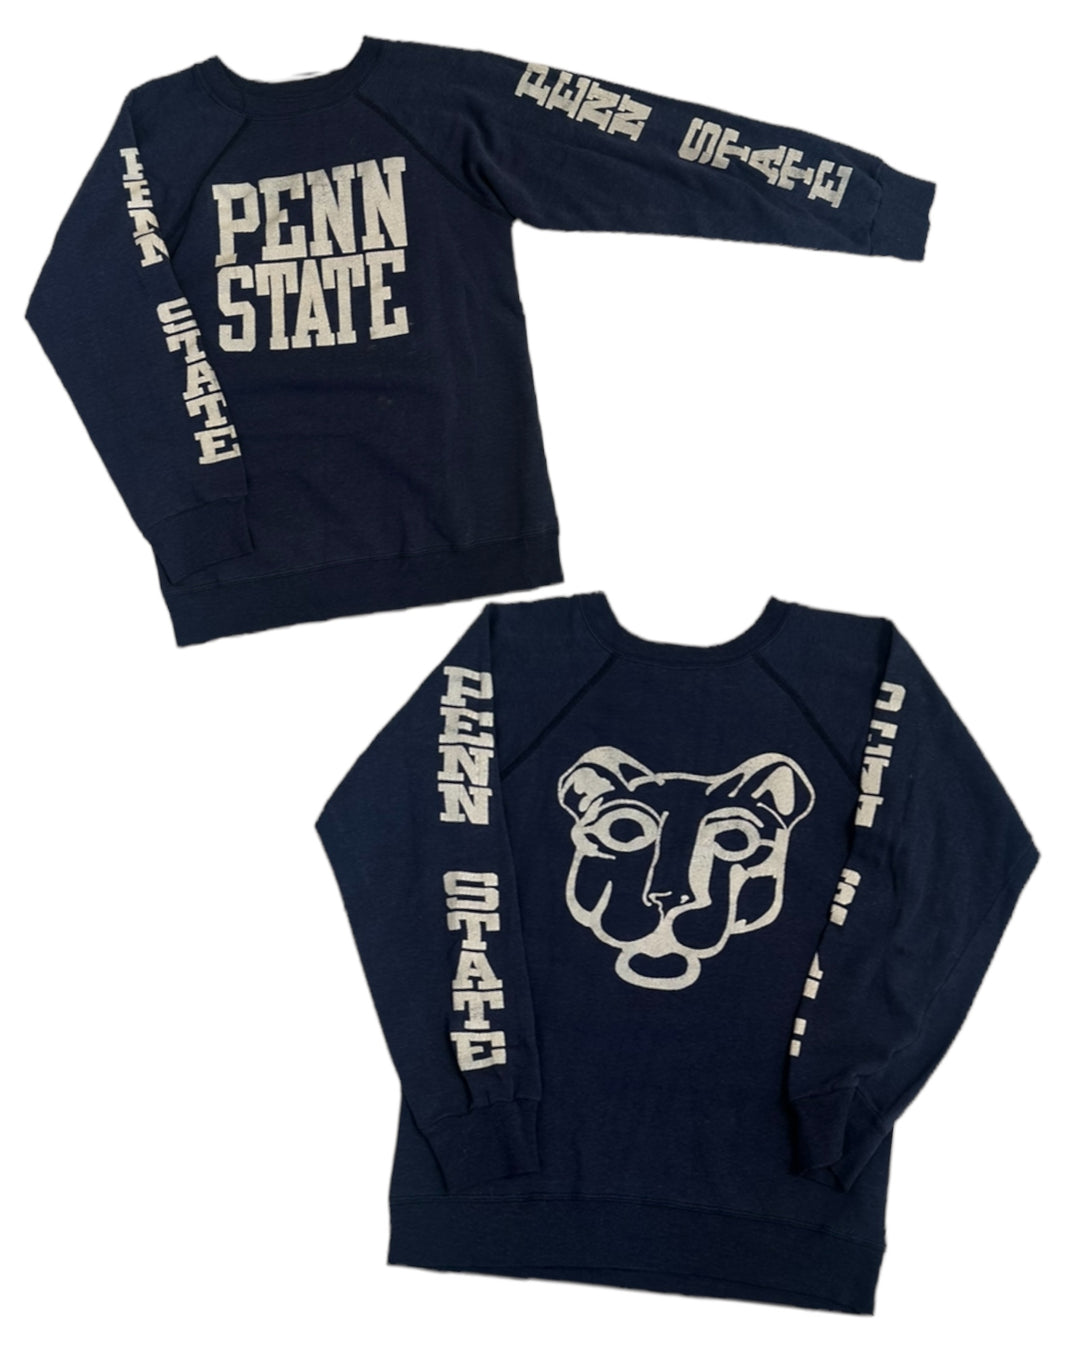 Penn State Vintage Lightweight Sweatshirt